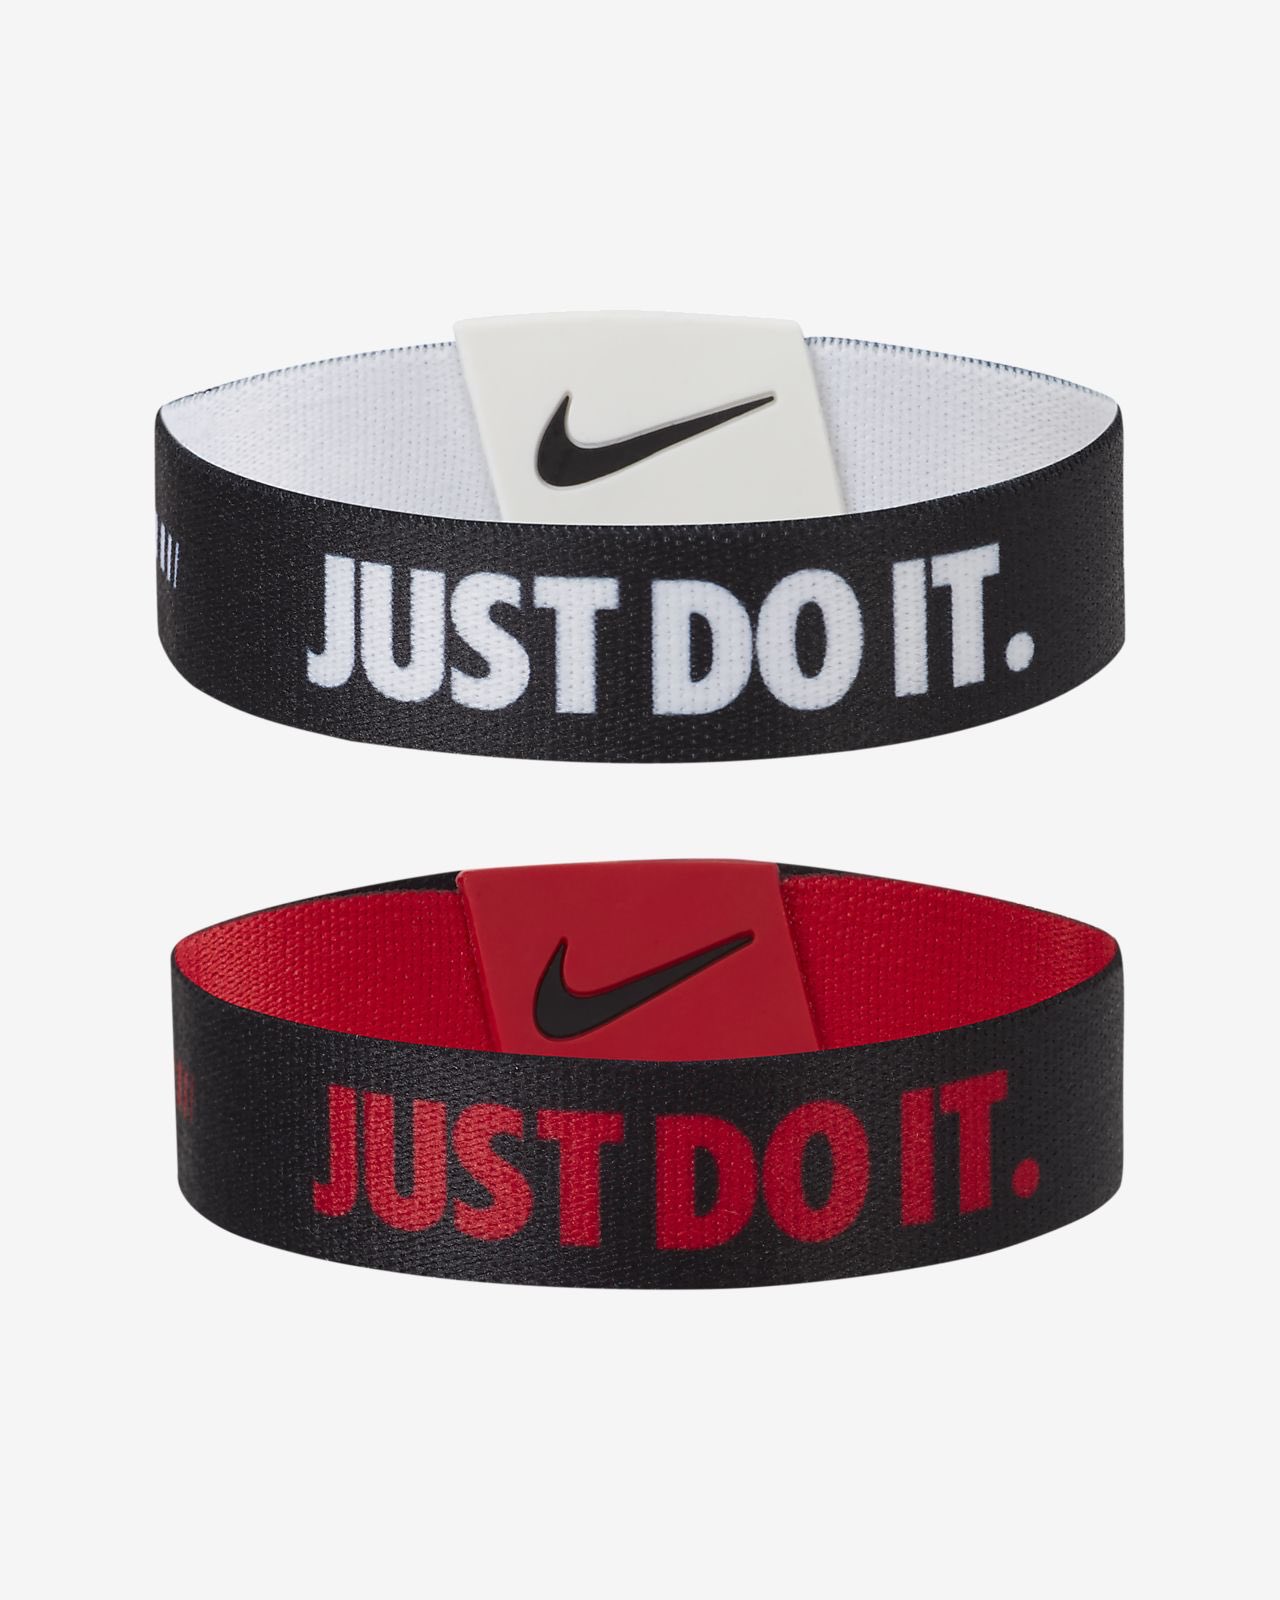 Nike Men's Silicone Rubber Bracelet | Nike men, Rubber bracelets, Nike